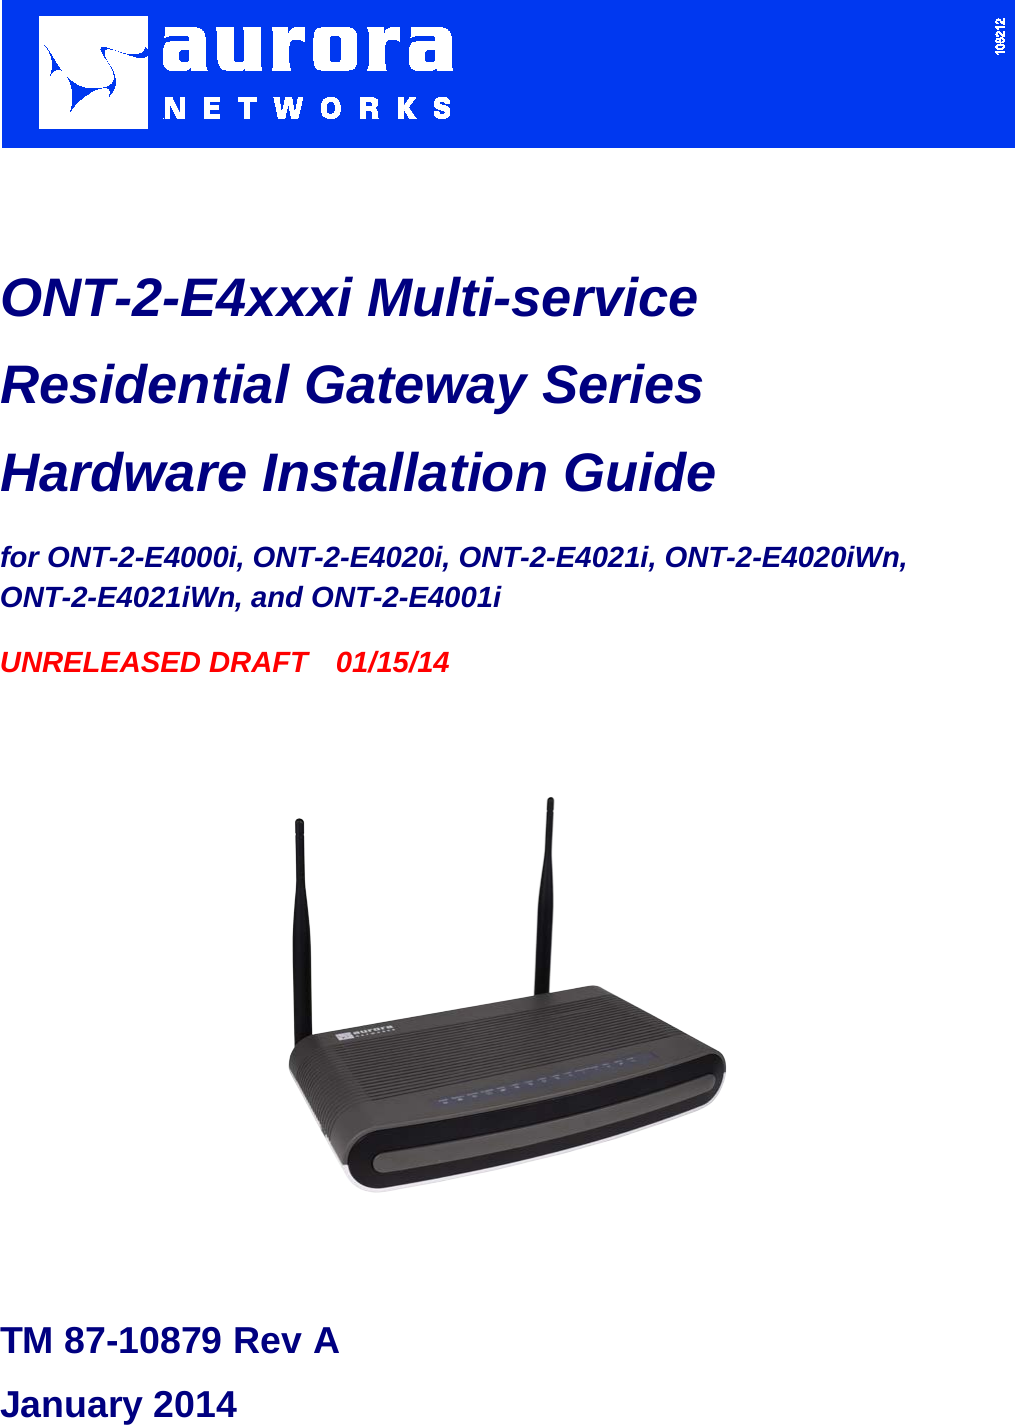      ONT-2-E4xxxi Multi-service Residential Gateway Series Hardware Installation Guide for ONT-2-E4000i, ONT-2-E4020i, ONT-2-E4021i, ONT-2-E4020iWn,   ONT-2-E4021iWn, and ONT-2-E4001i UNRELEASED DRAFT  01/15/14        TM 87-10879 Rev A January 2014 